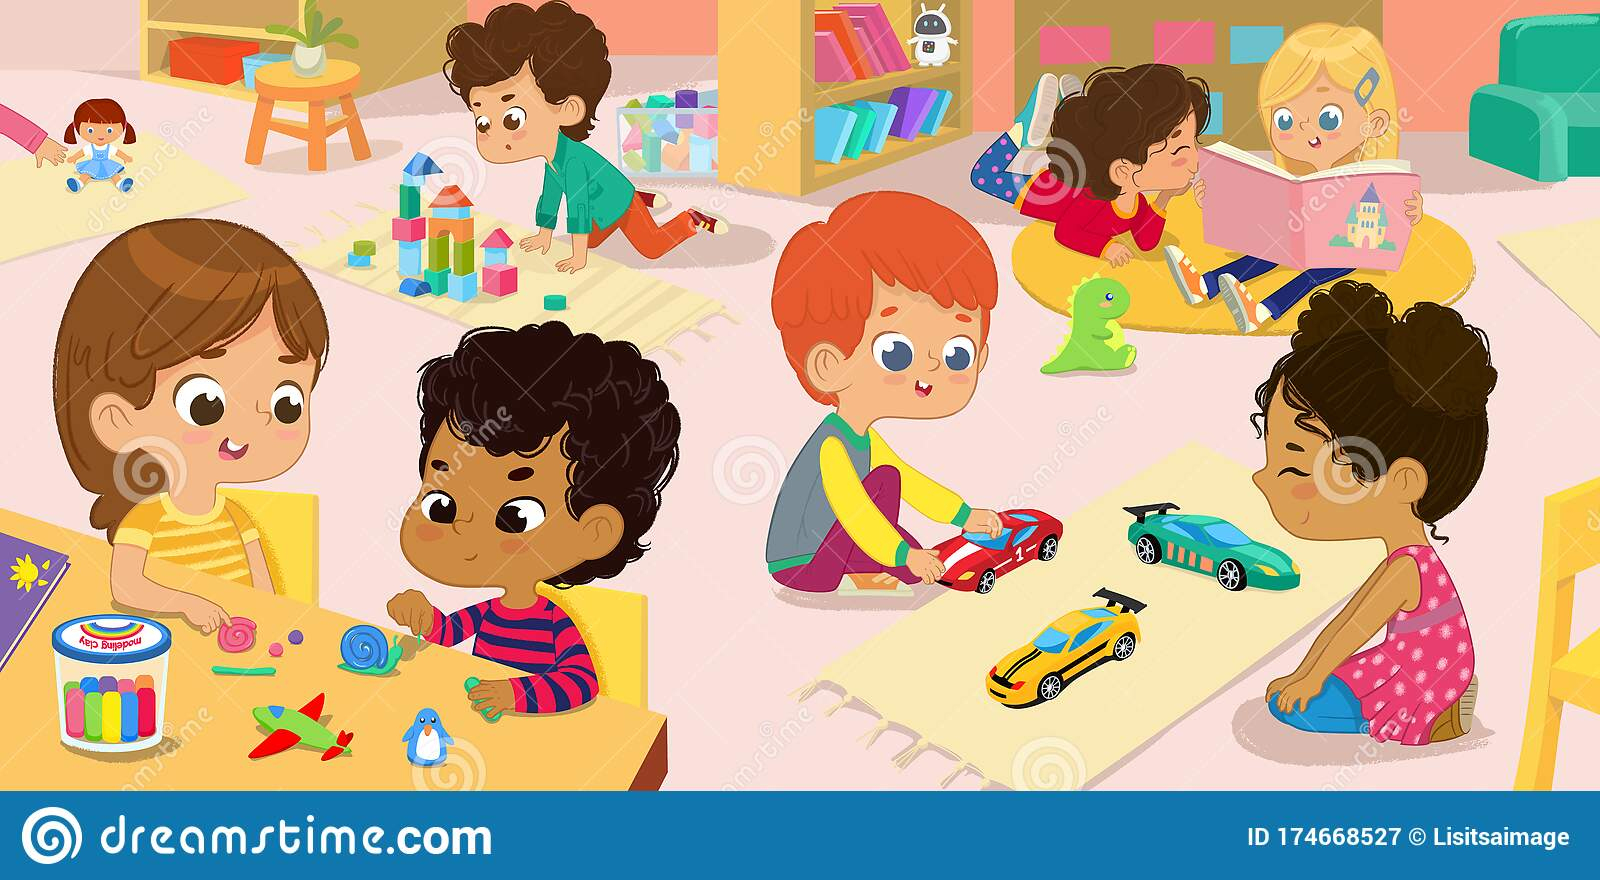 Illustration Of The Kindergarten Class And Children`s Activity In The für Kinder Picture Cartoon,